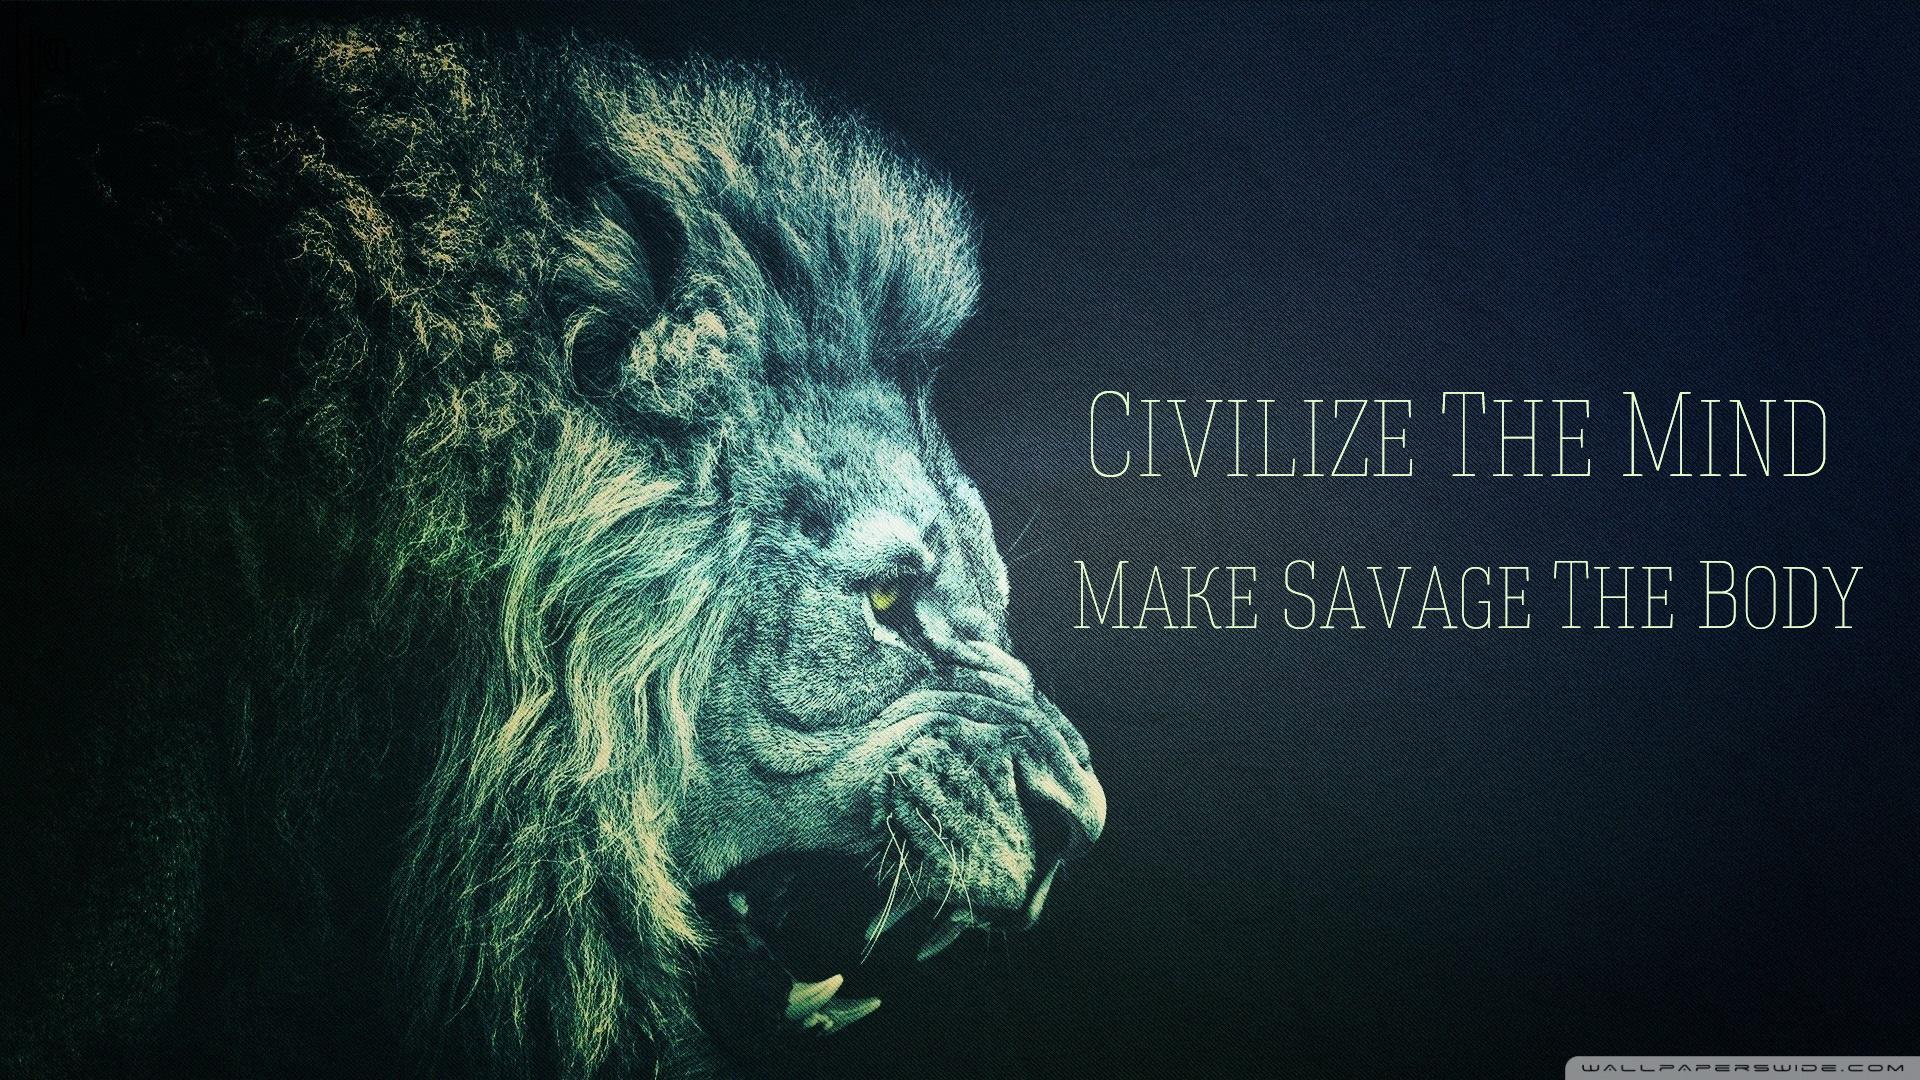 Image] [1920x1080] Motivational Wallpaper. Civilize the Savage